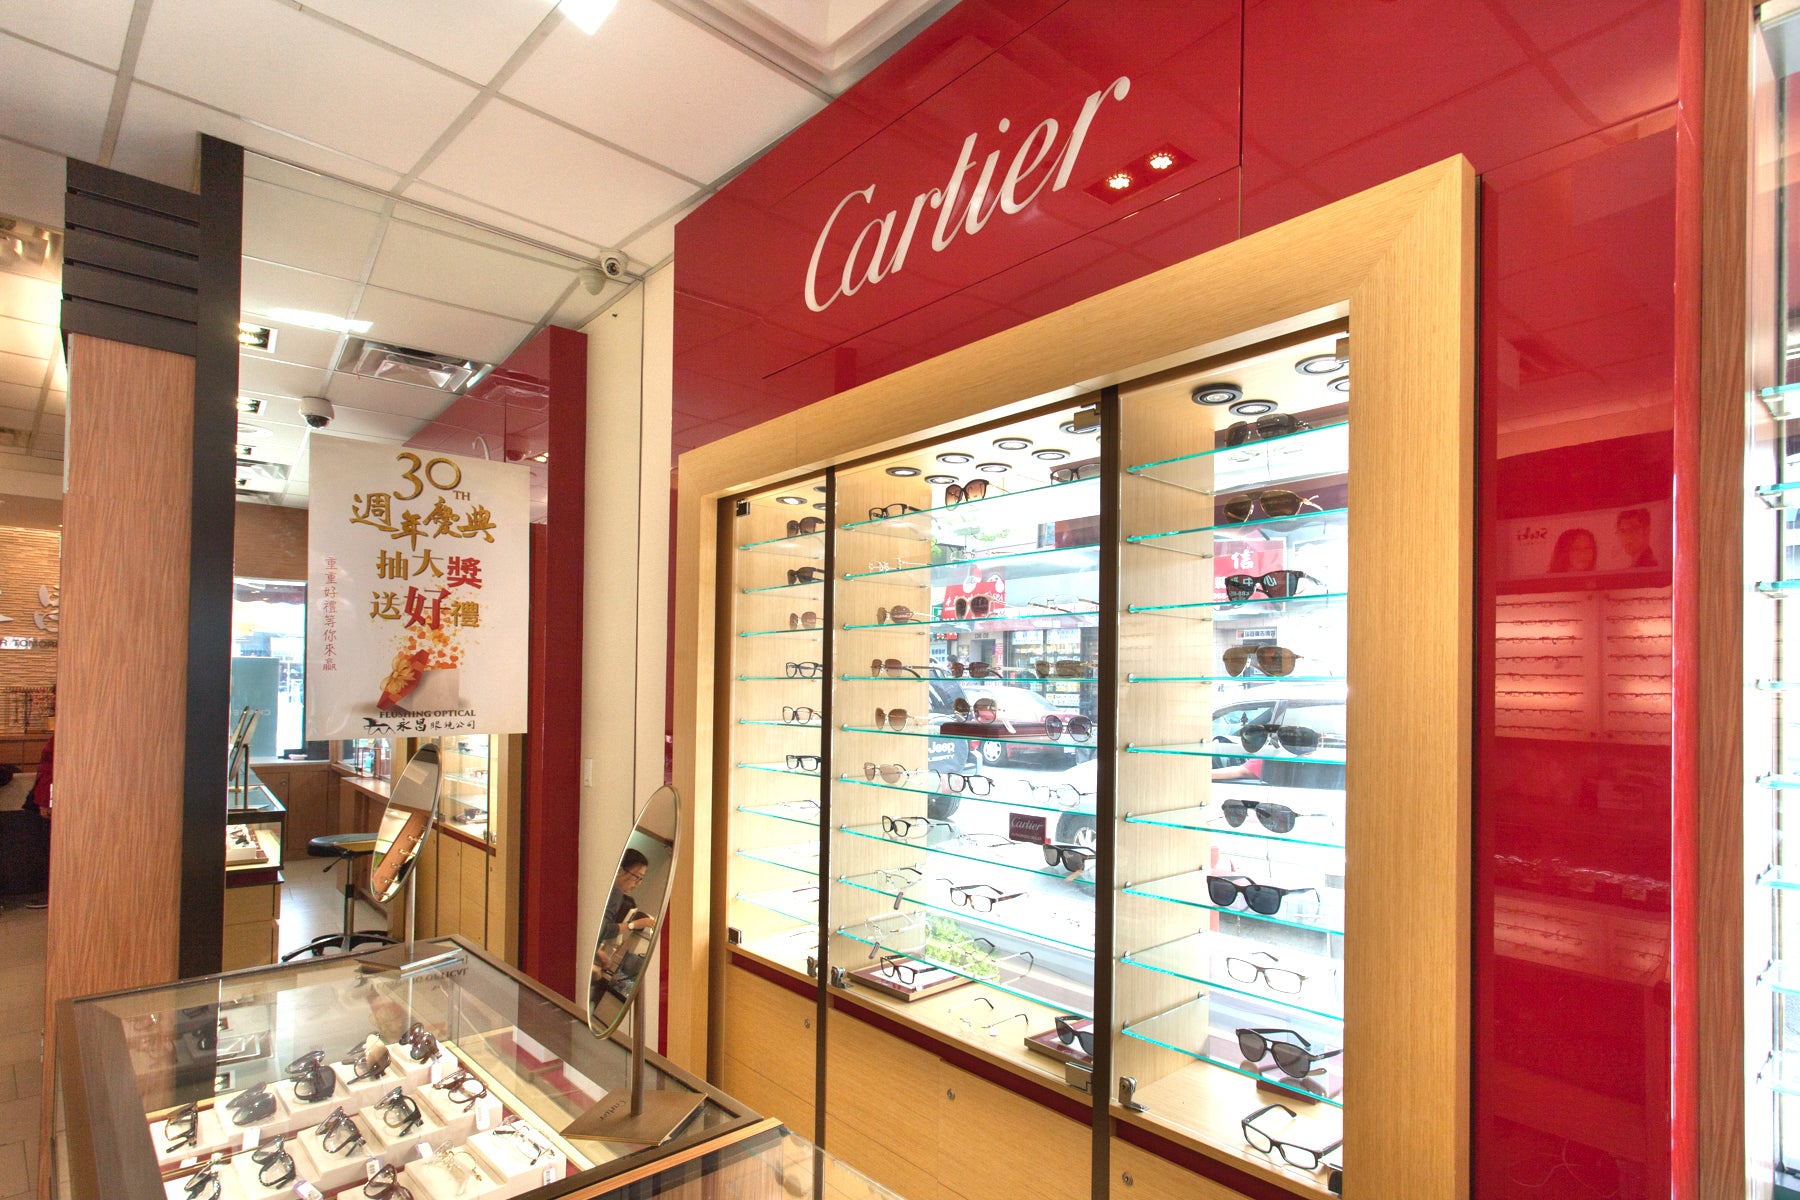 cartier eyewear display